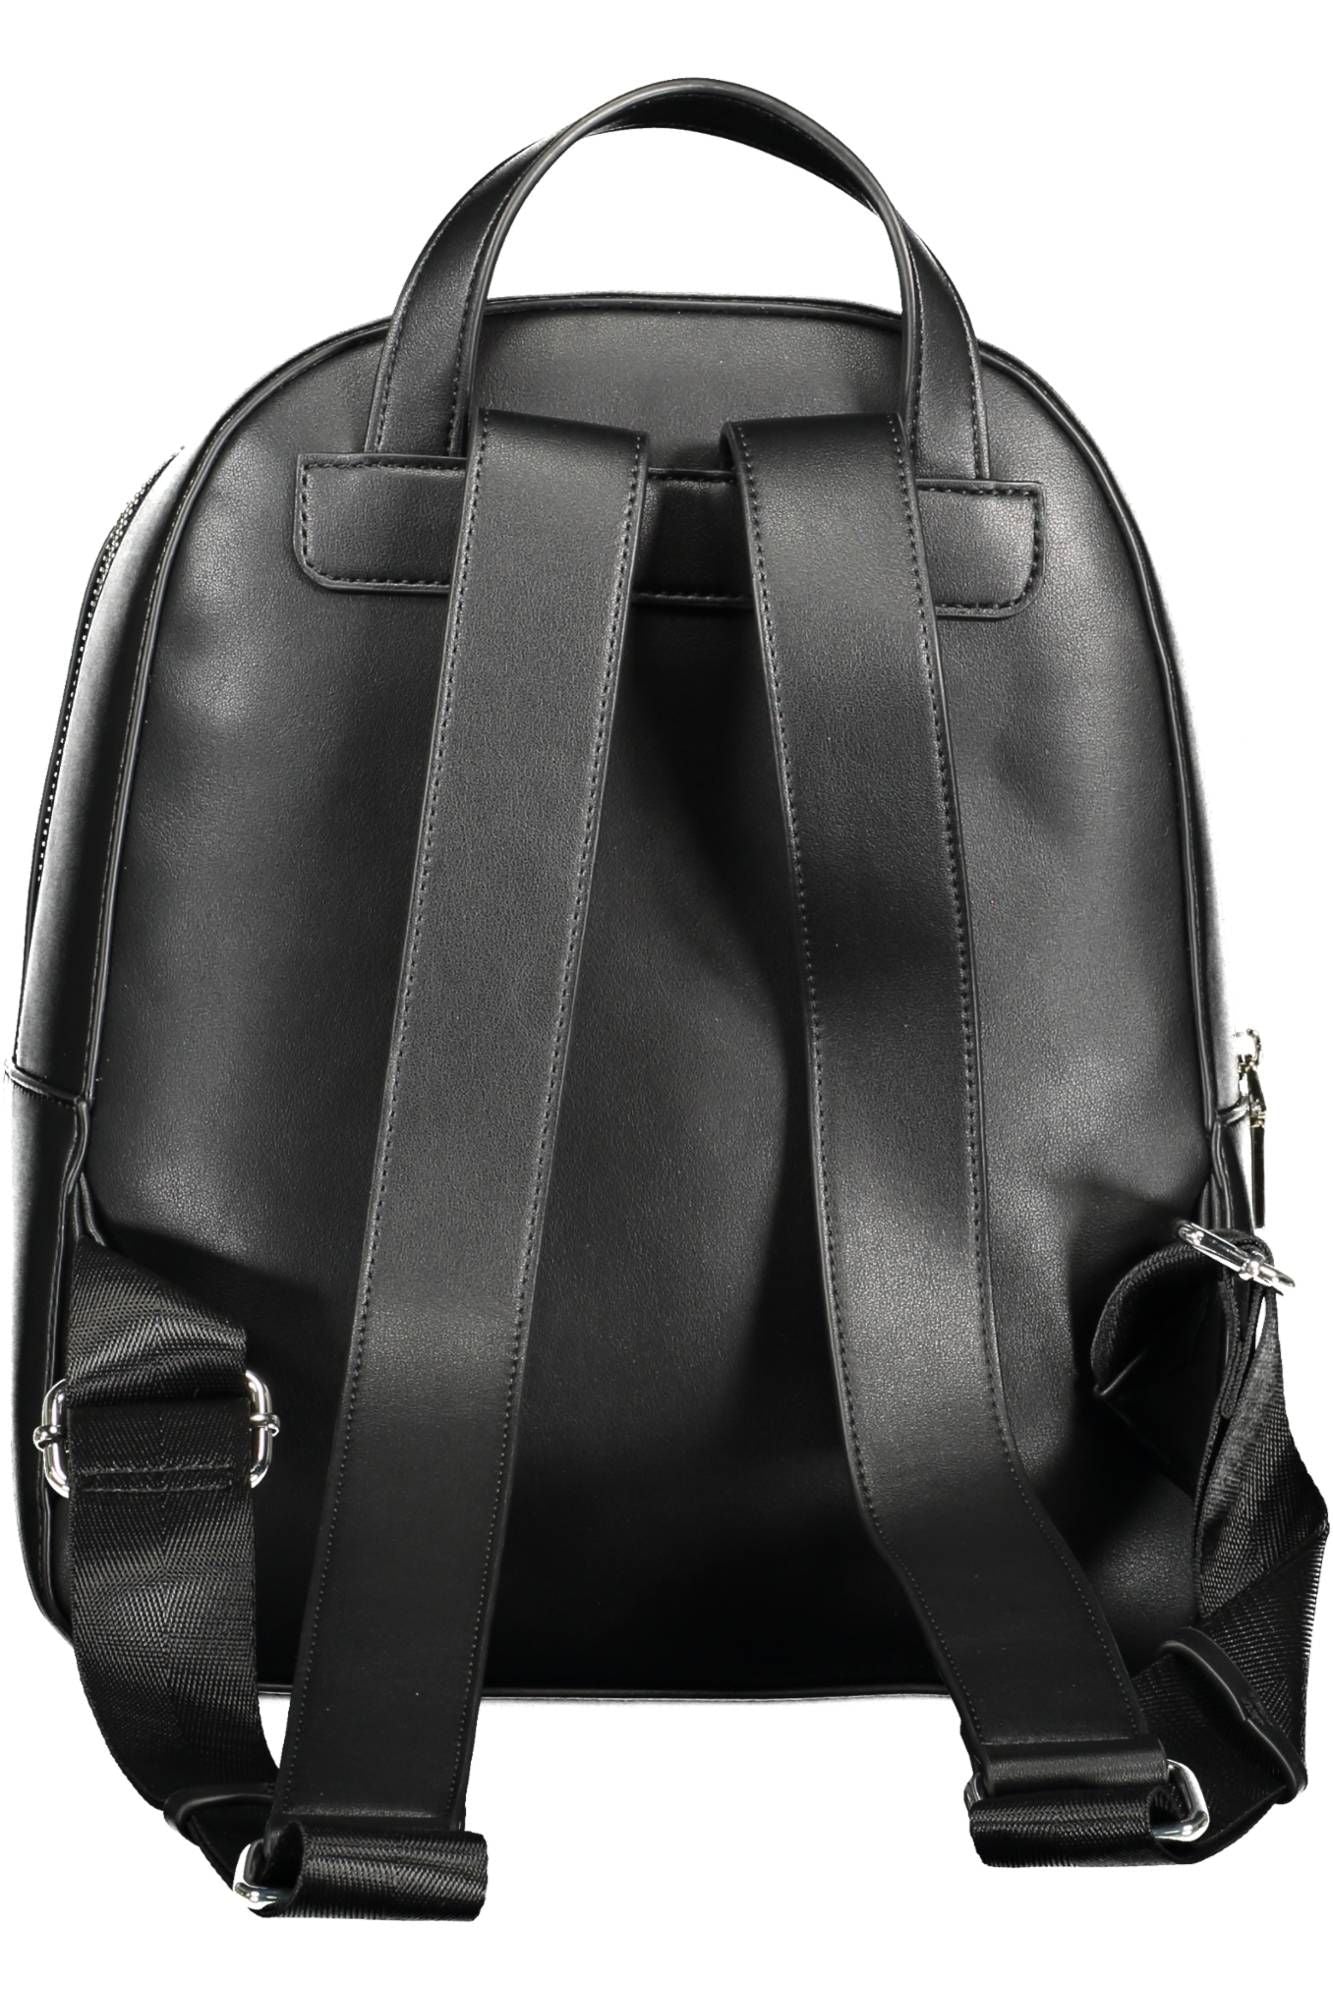 Elegant Black Backpack with Contrasting Details - Divitiae Glamour